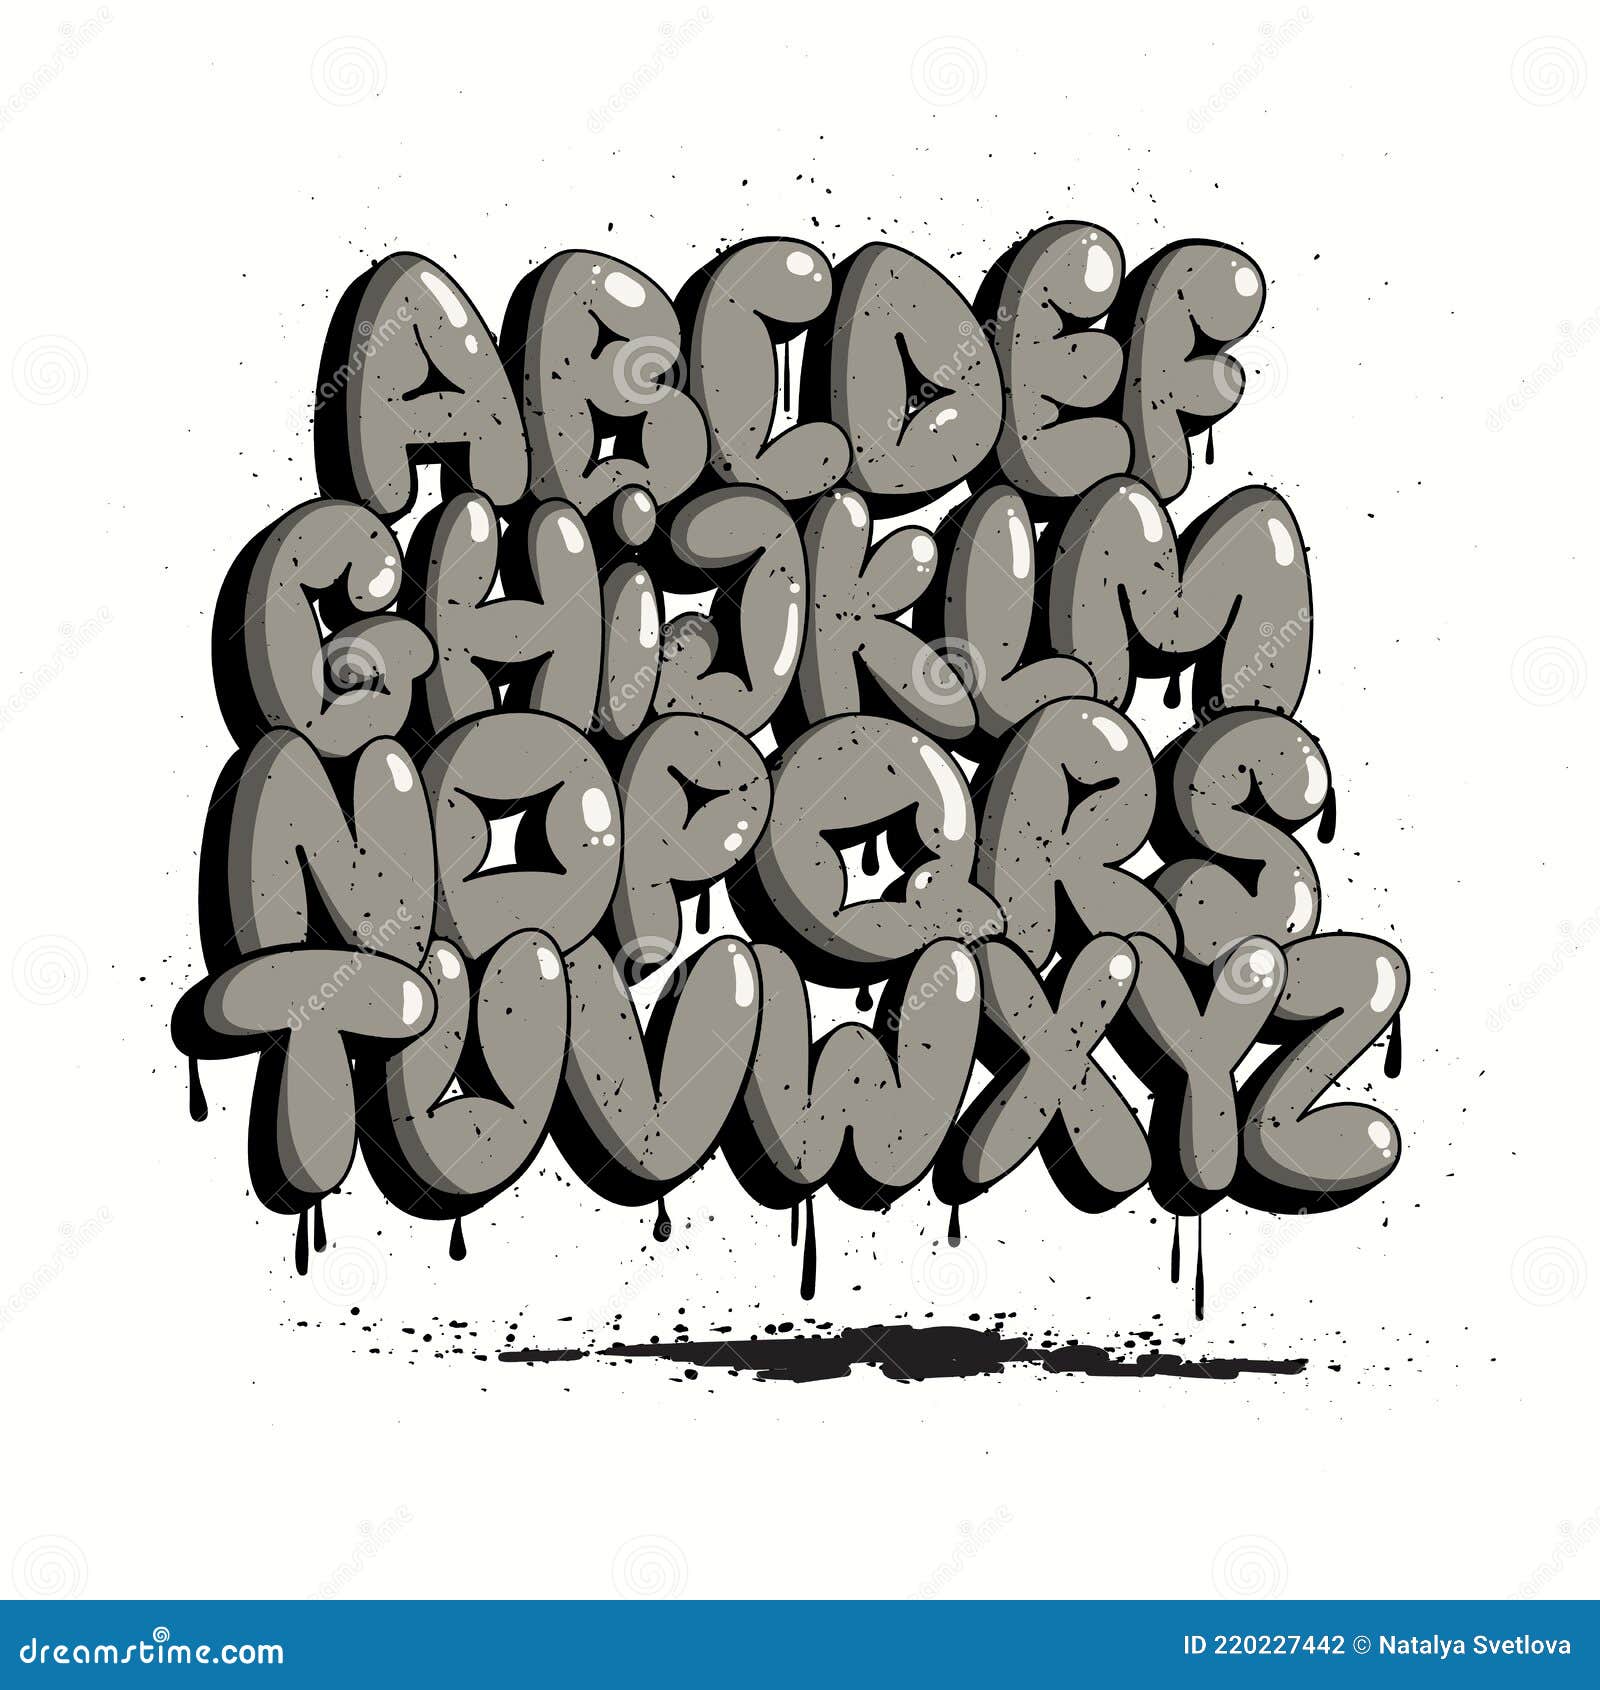 ALPHABET-black - Graffiti - Sticker